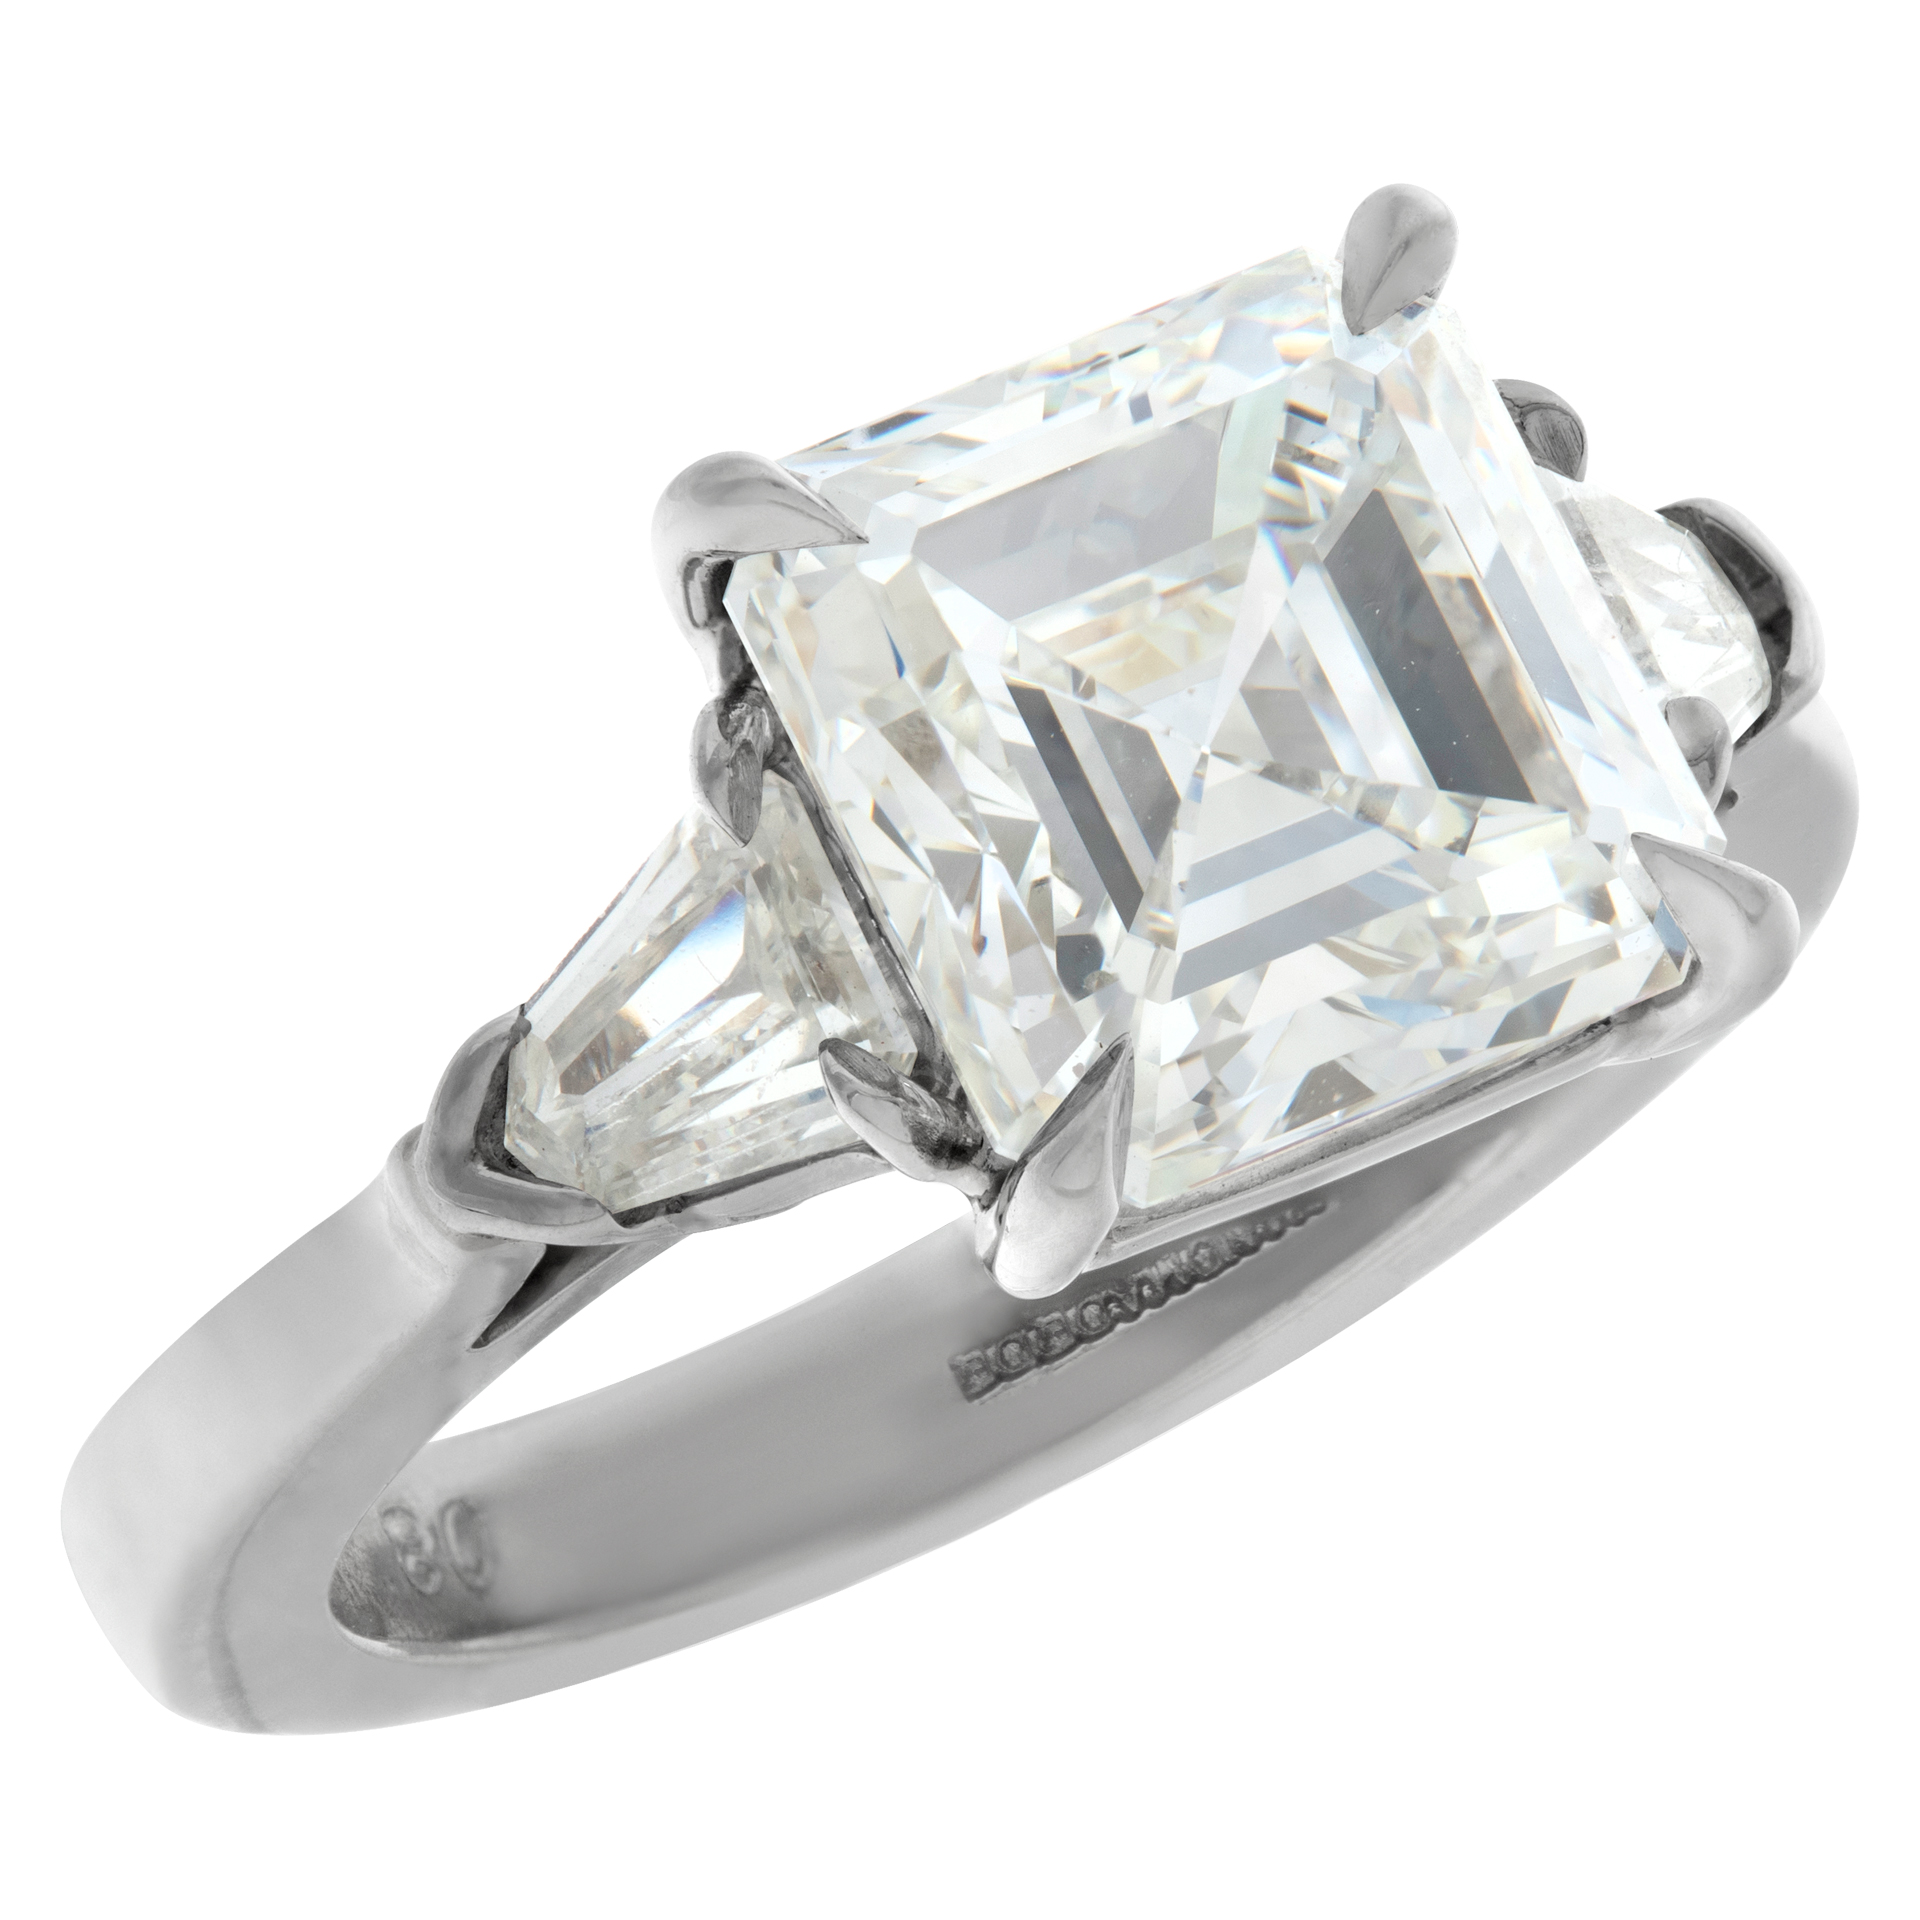 GIA certified square emerald cut diamond 4.08 carat (G color, VVS1 clarity) ring set in platinum (Stones) image 3